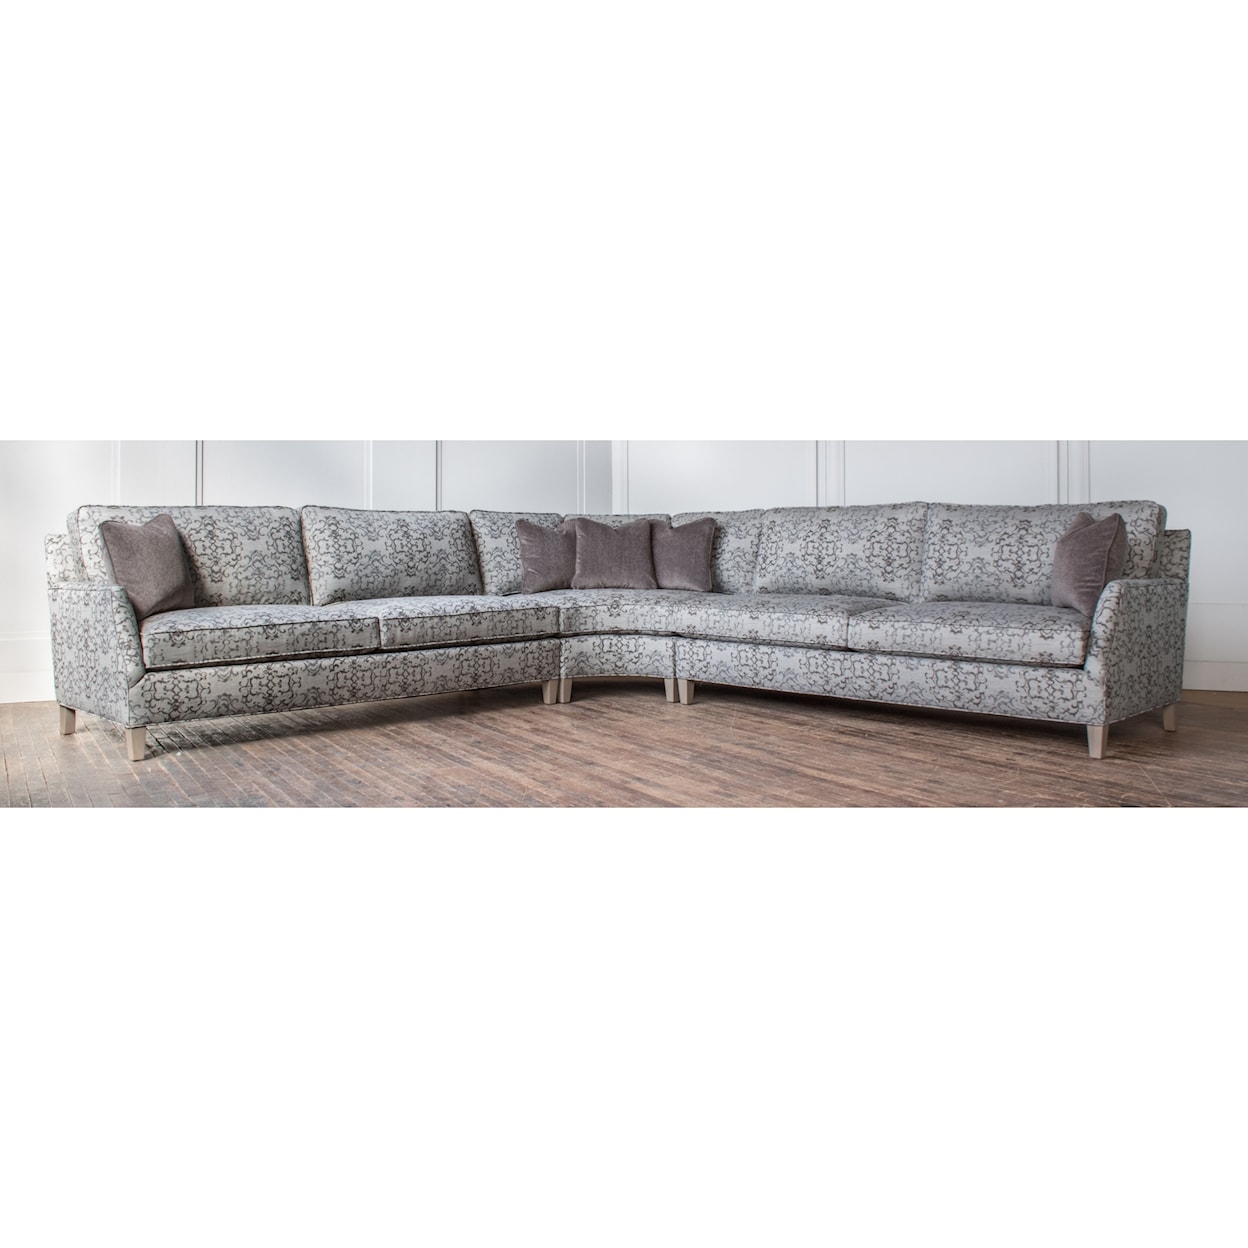 Hallagan Furniture Brighton Customizable Curved Sectional